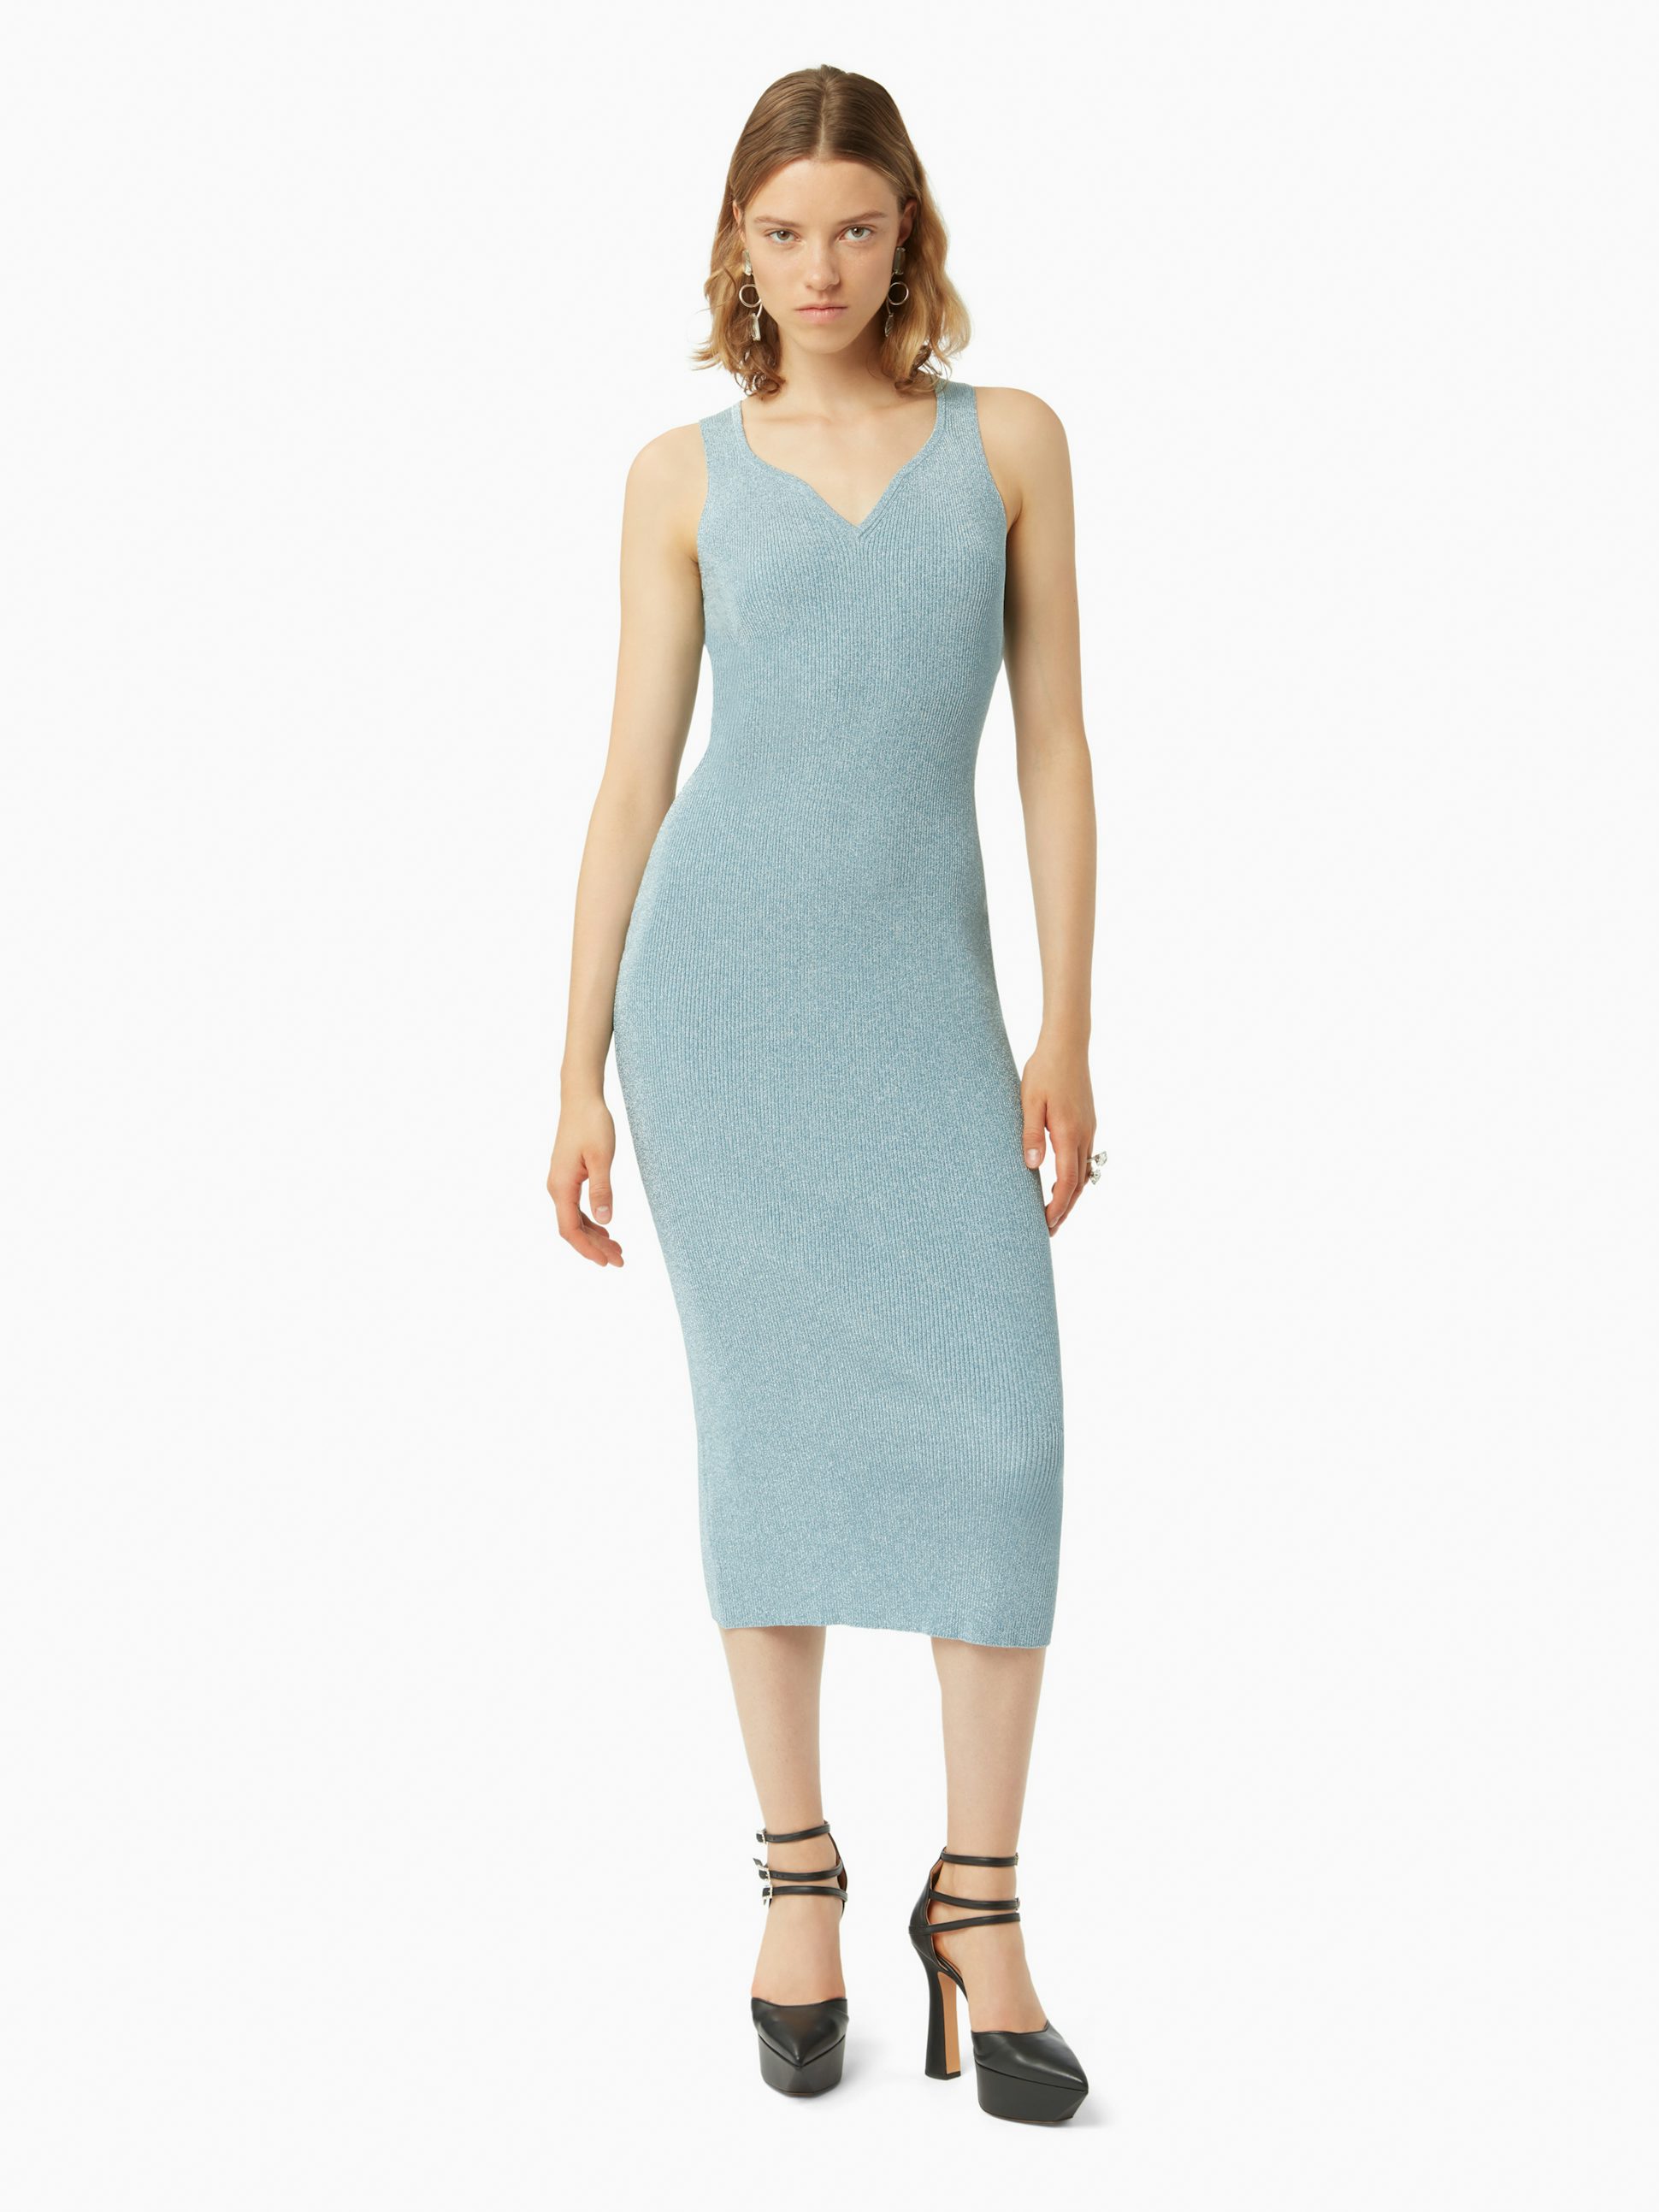 Heart neckline sleeveless dress in light blue - Nina Ricci